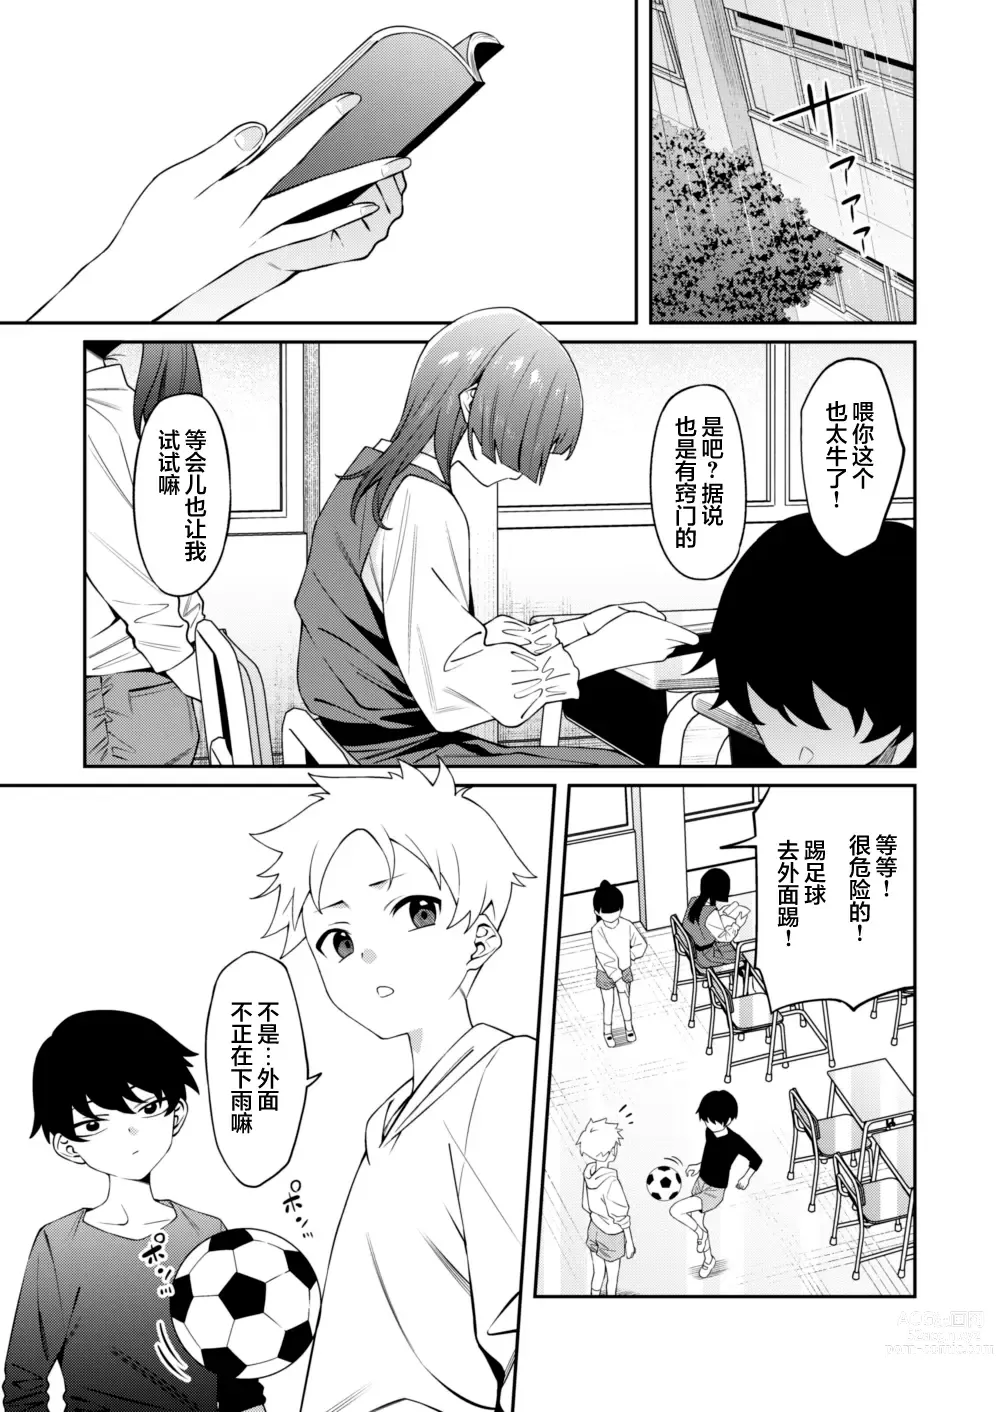 Page 2 of doujinshi Sumire-chan ha atama ga ii.